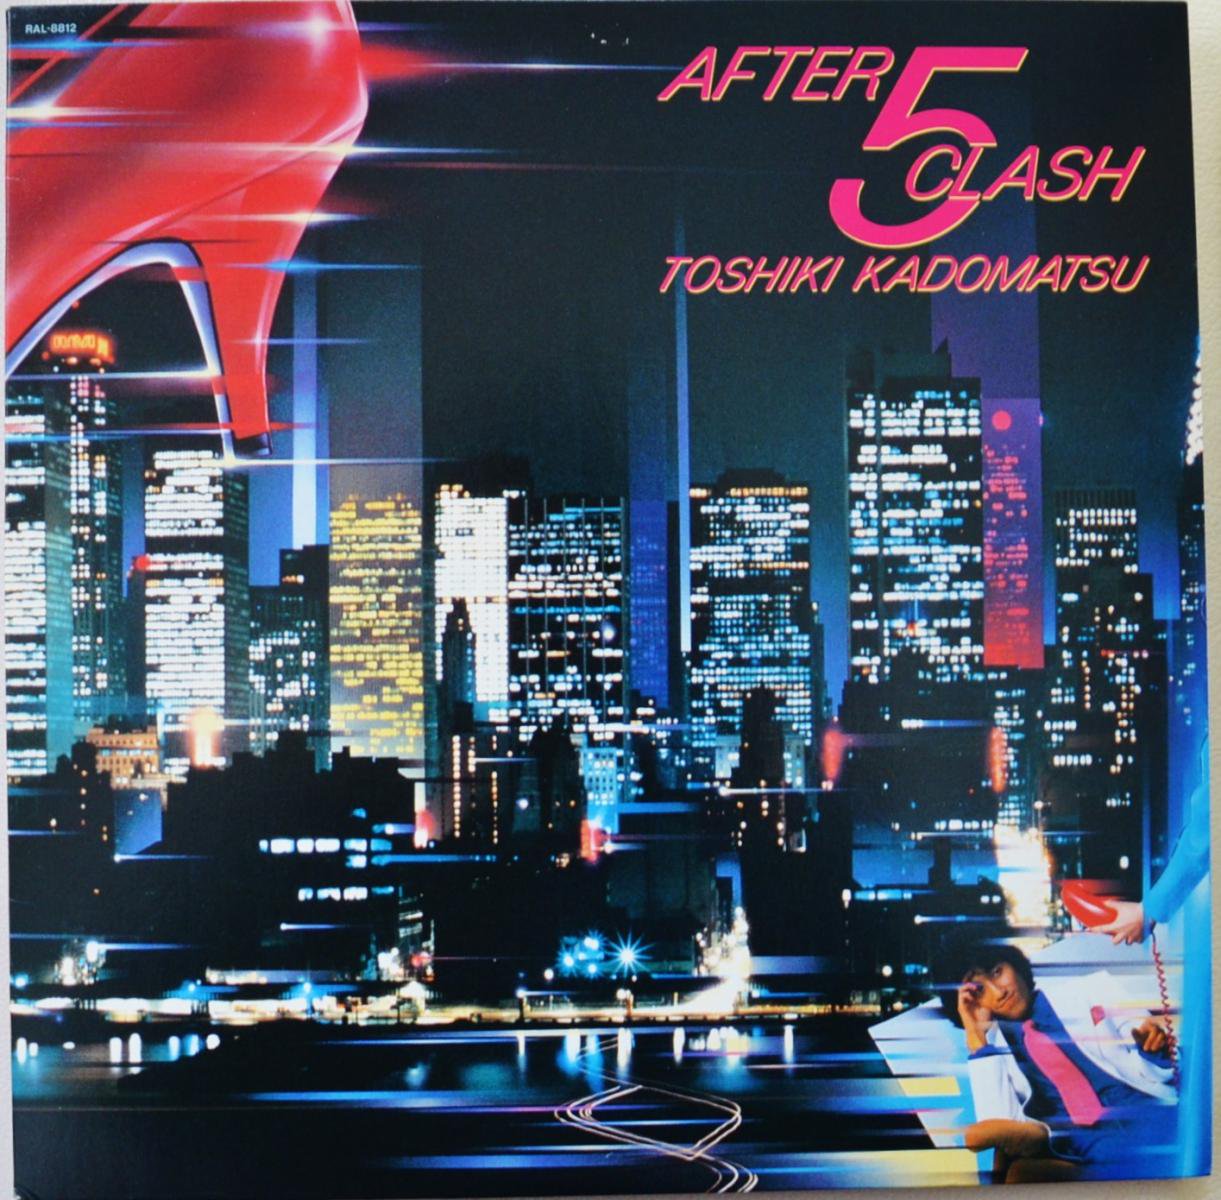 角松敏生 TOSHIKI KADOMATSU / AFTER 5 CLASH (LP) - HIP TANK RECORDS